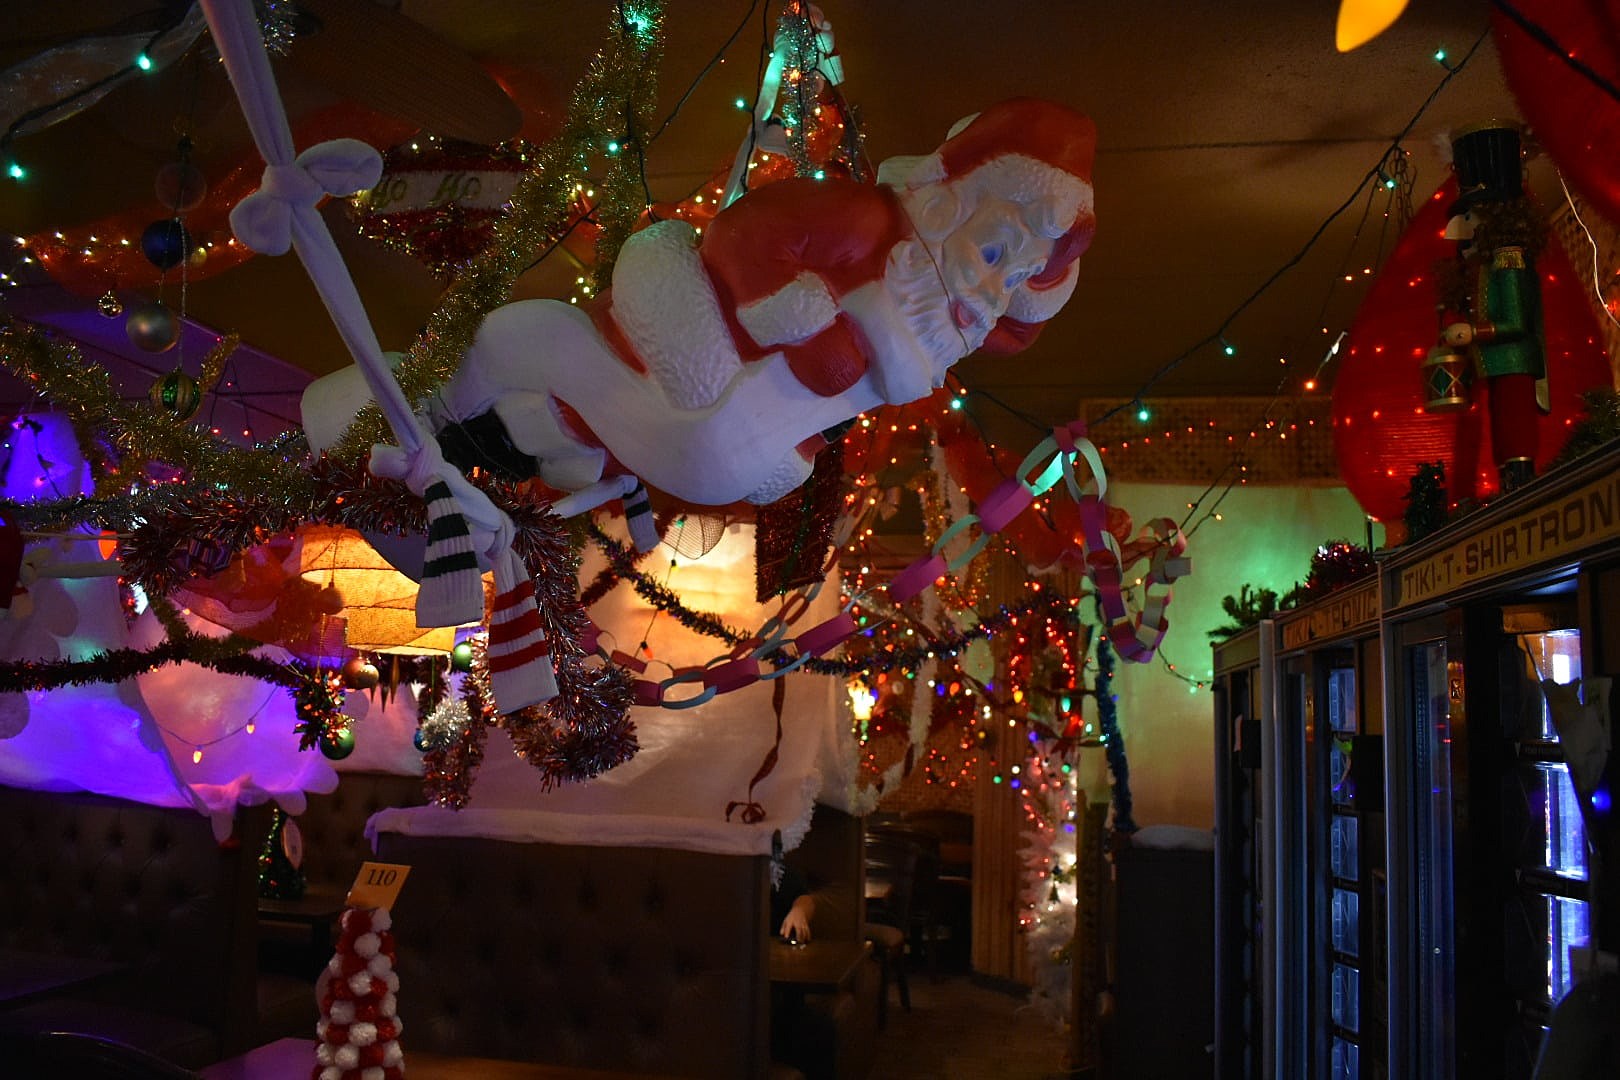 Minnesota Restaurant Turns into Tacky Christmas Palace